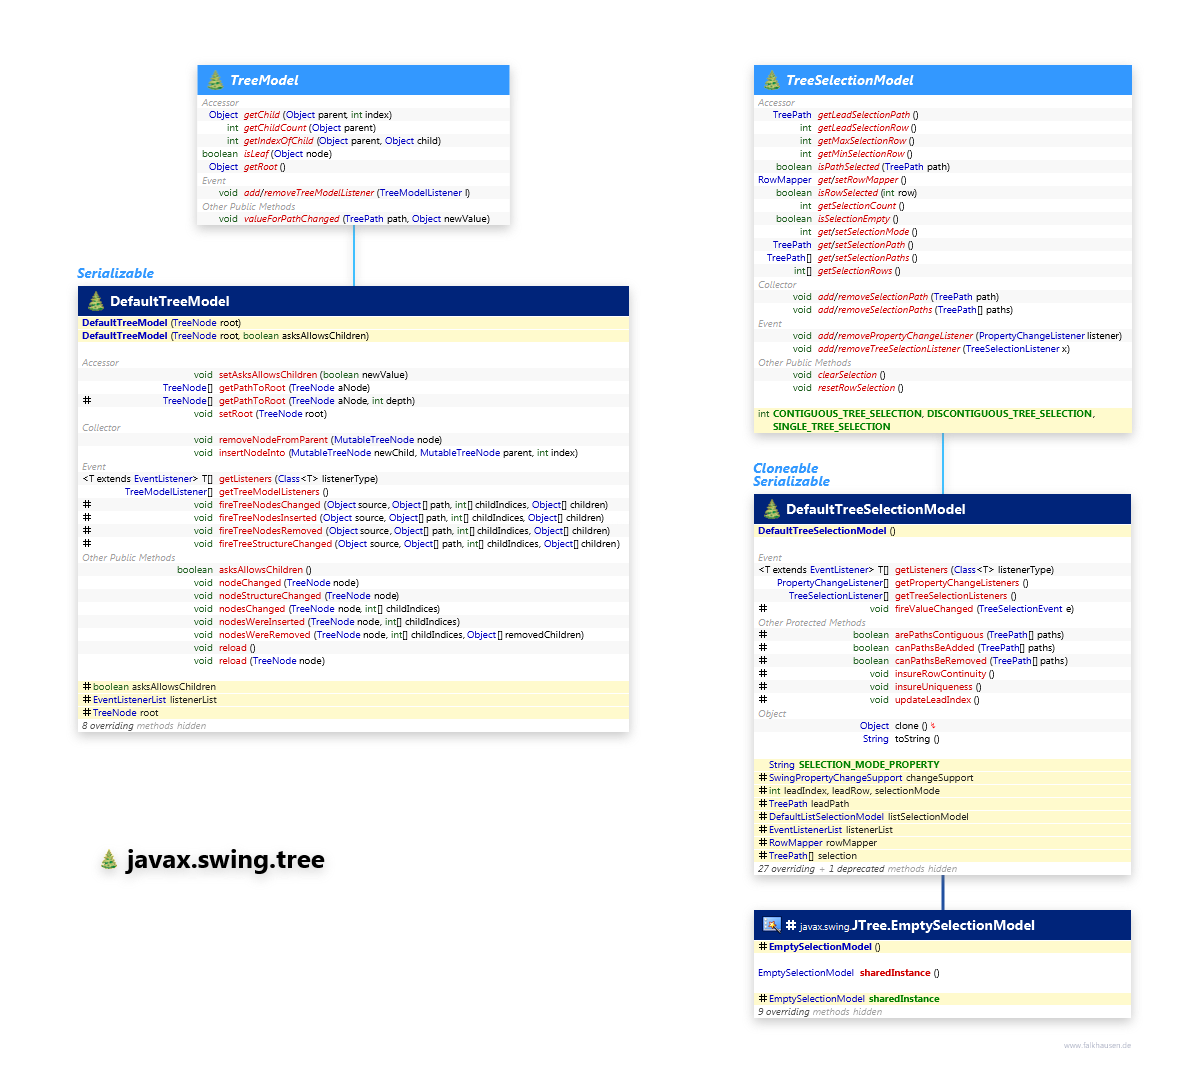 javax.swing.tree TreeModel class diagram and api documentation for Java 7